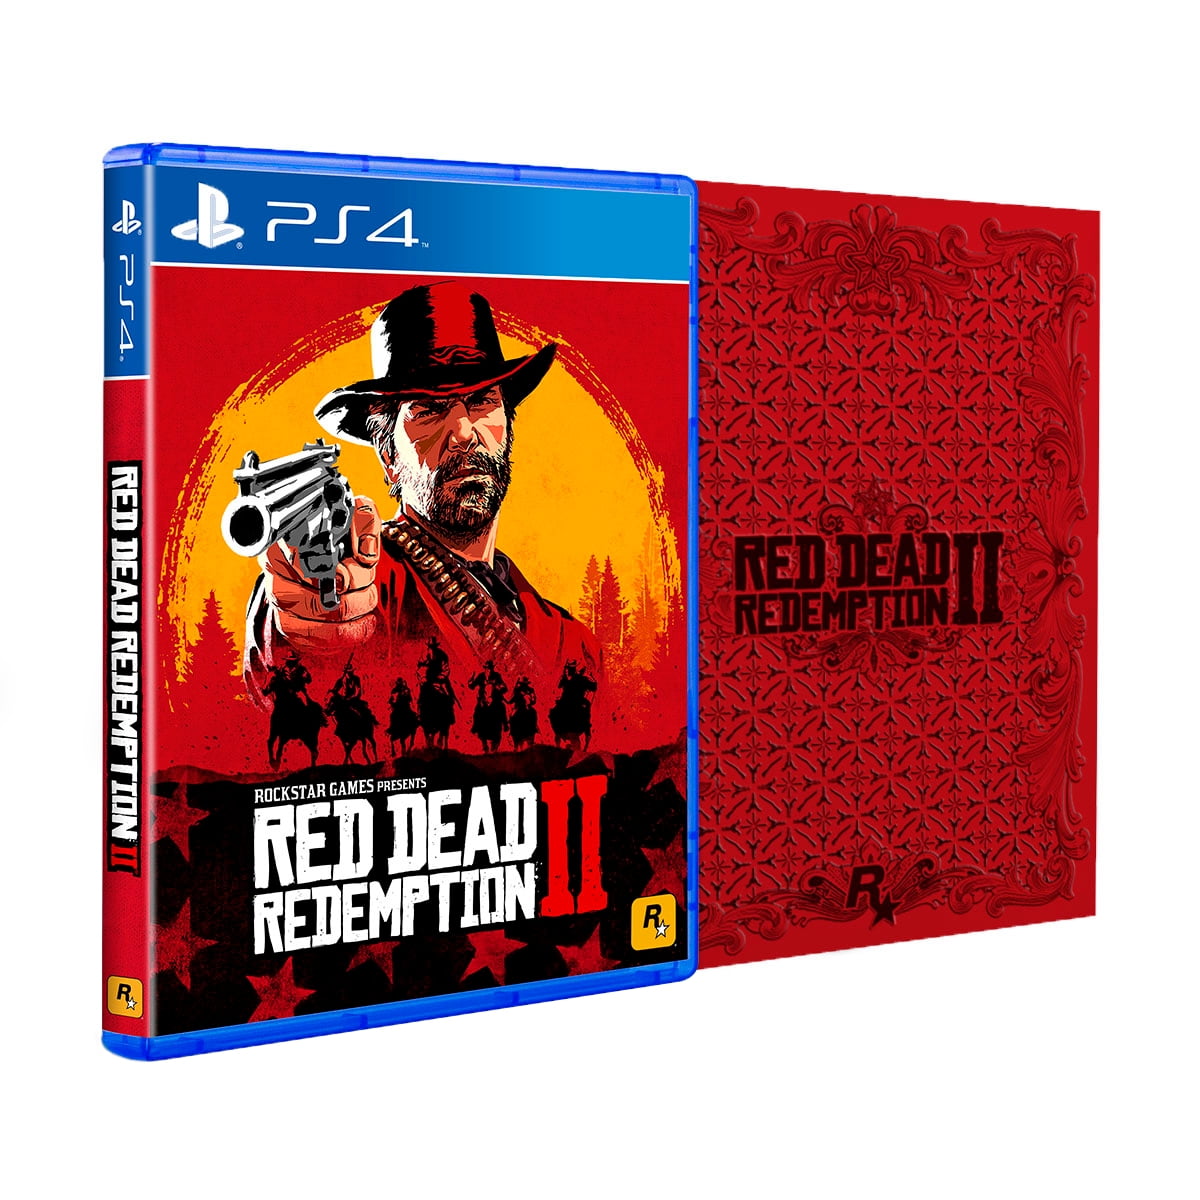 Red Dead Redemption 2 Edition, Rockstar Games, PlayStation 4, - Walmart.com